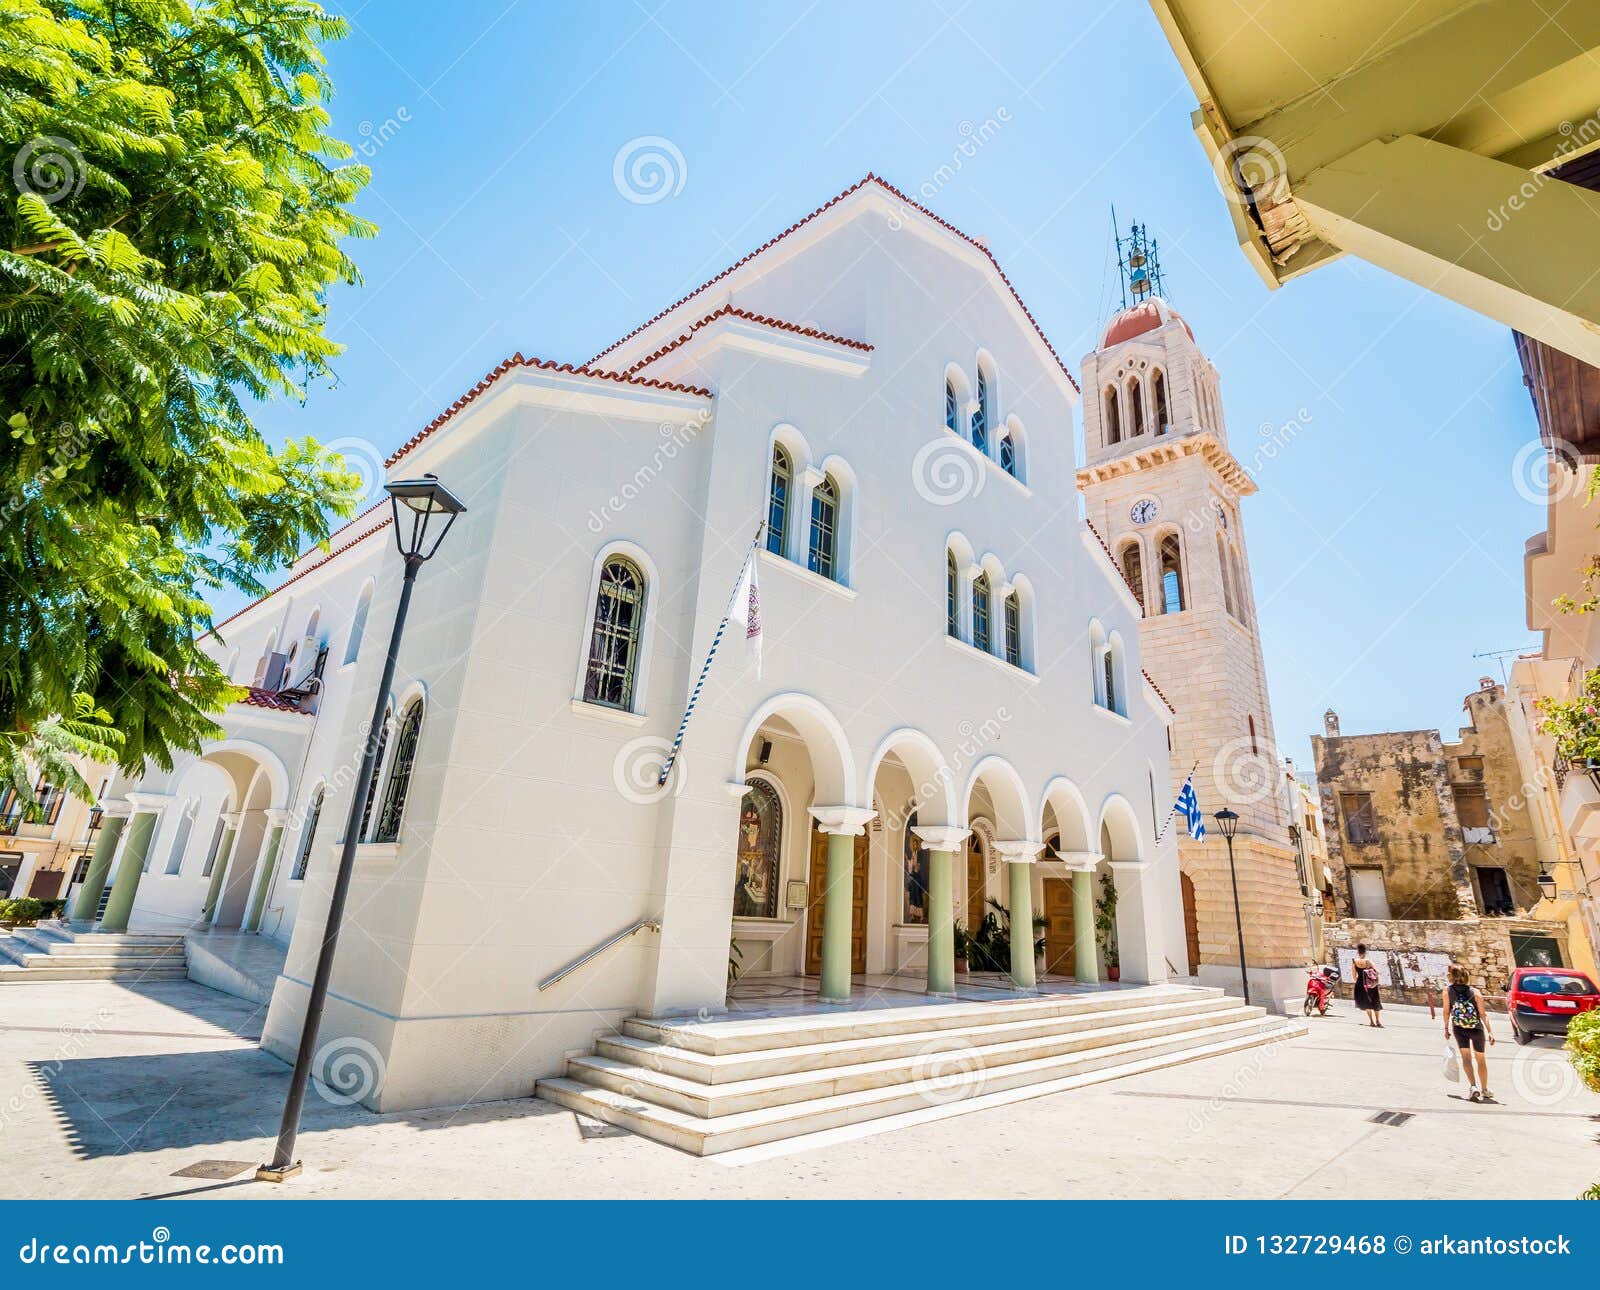 megalos antonios church in rethymnon city on the crete island, greece